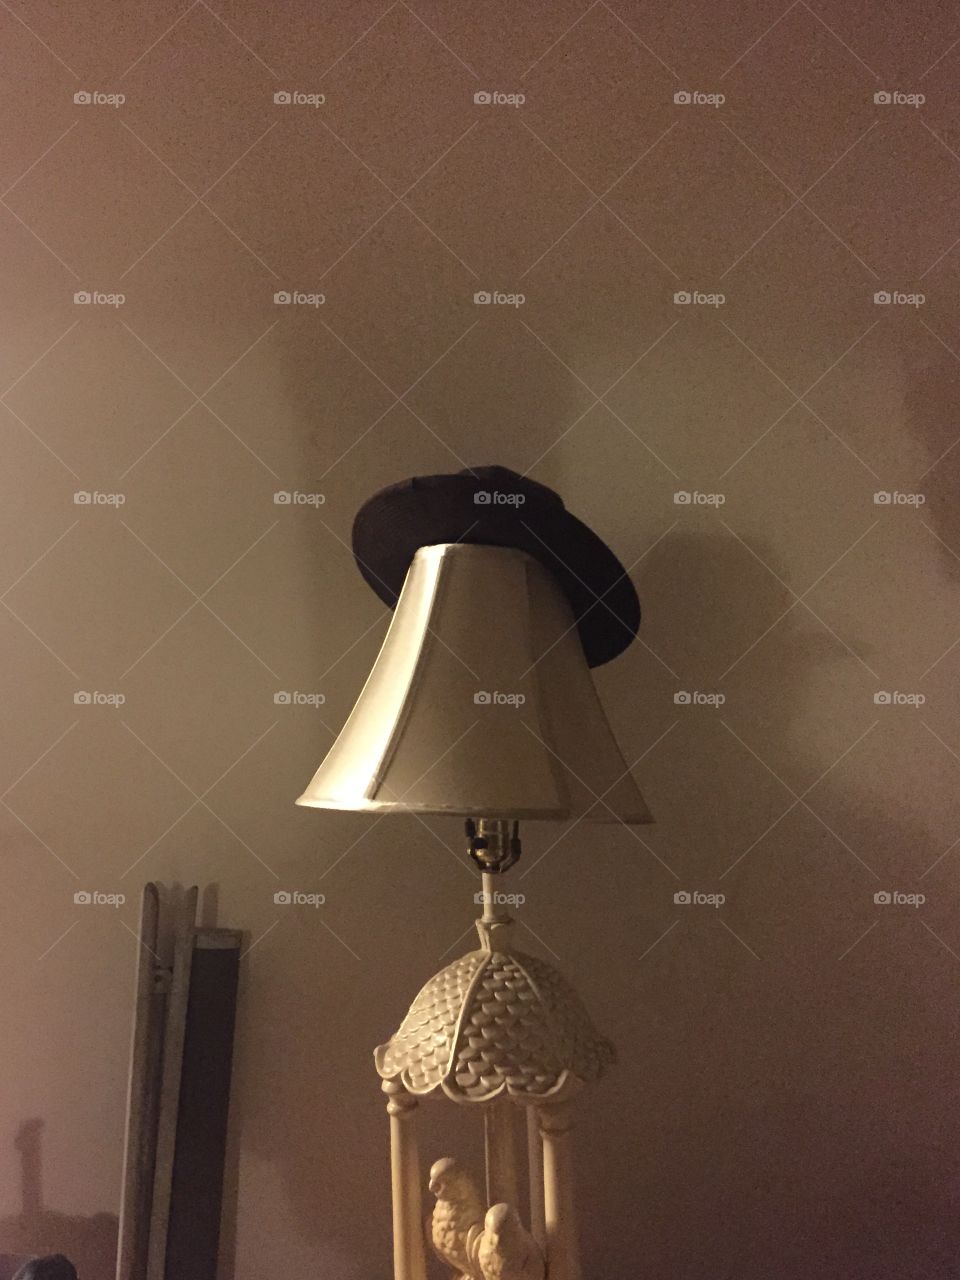 Hat on lamp. Hat on lamp